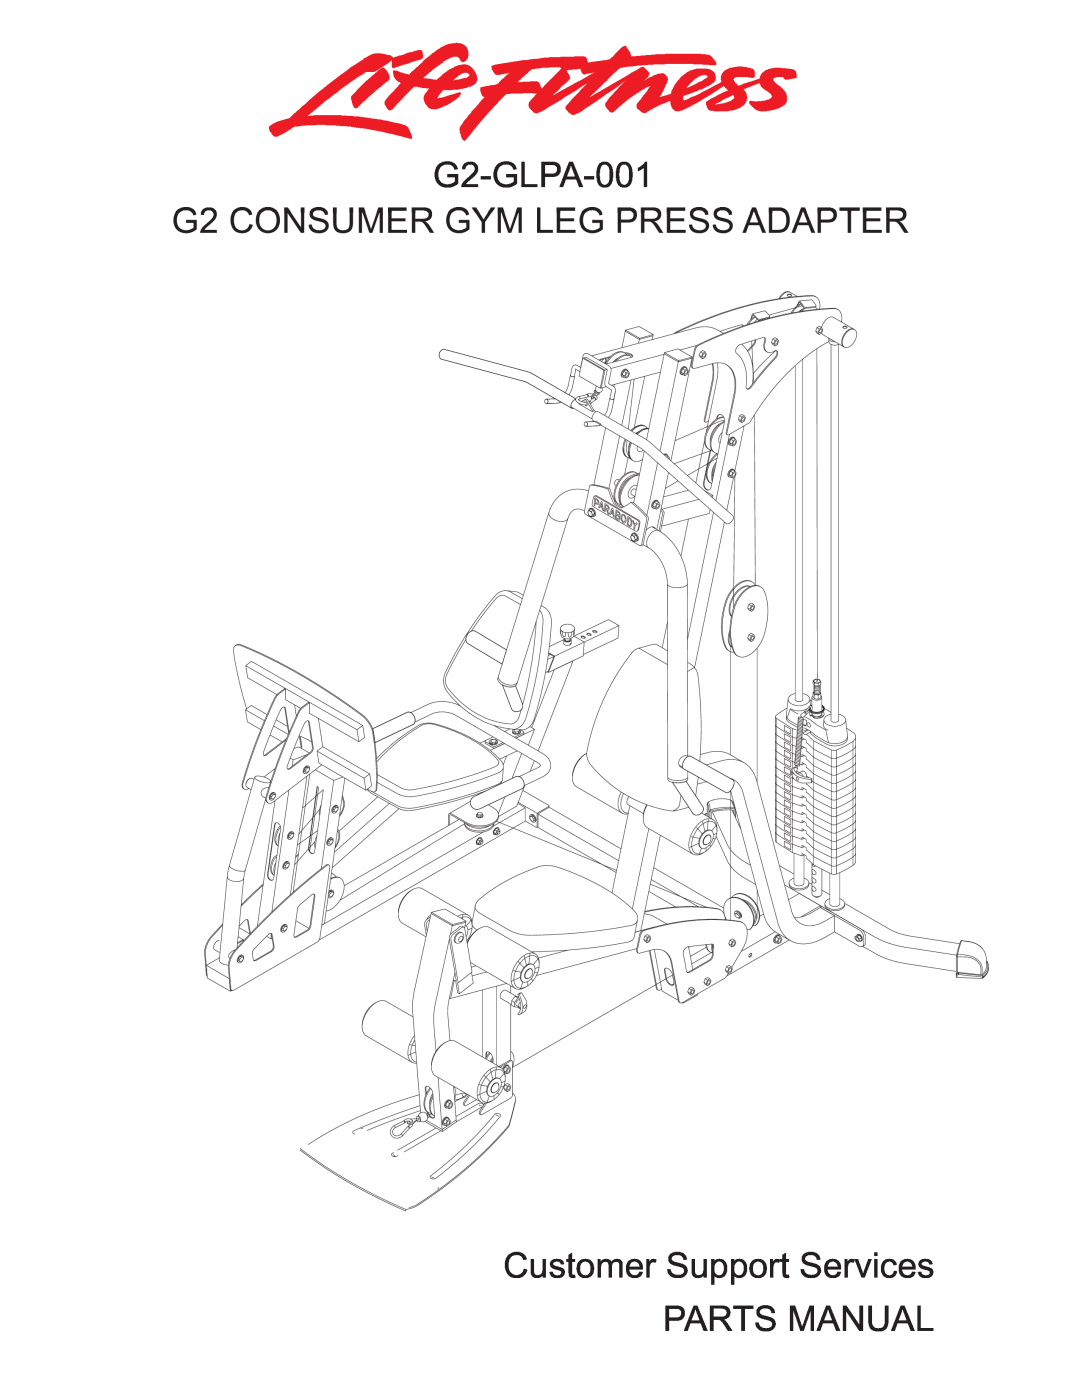 Life Fitness manual G2-GLPA-001 G2 CONSUMER GYM LEG PRESS ADAPTER, Customer Support Services PARTS MANUAL 